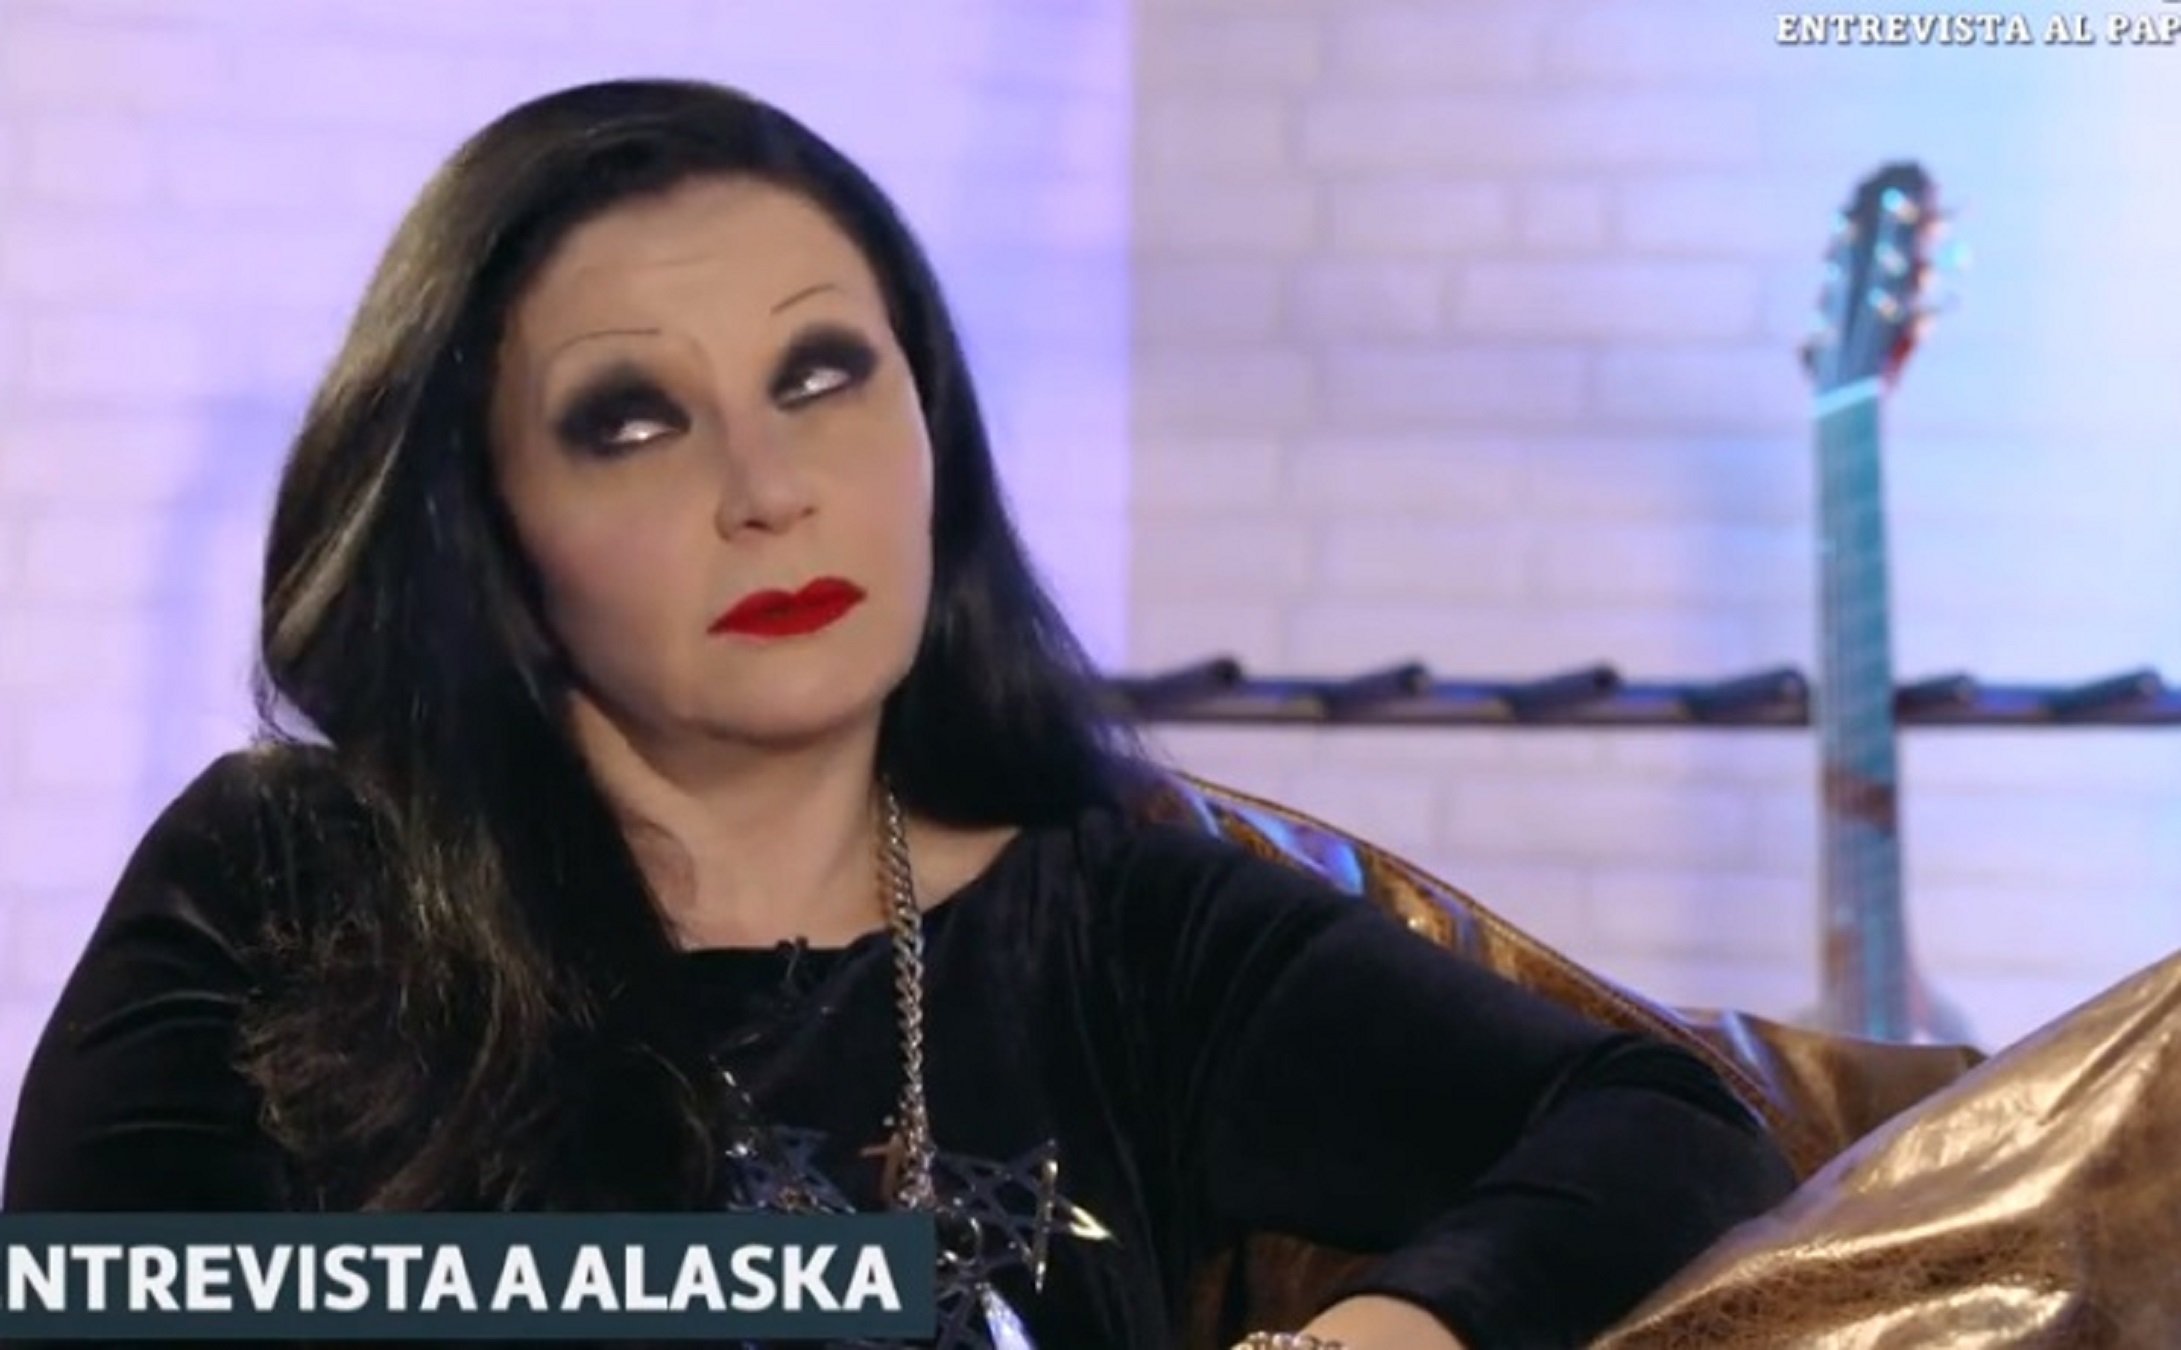 Alaska, defensora de Felip VI: "Ha hecho muy bien"